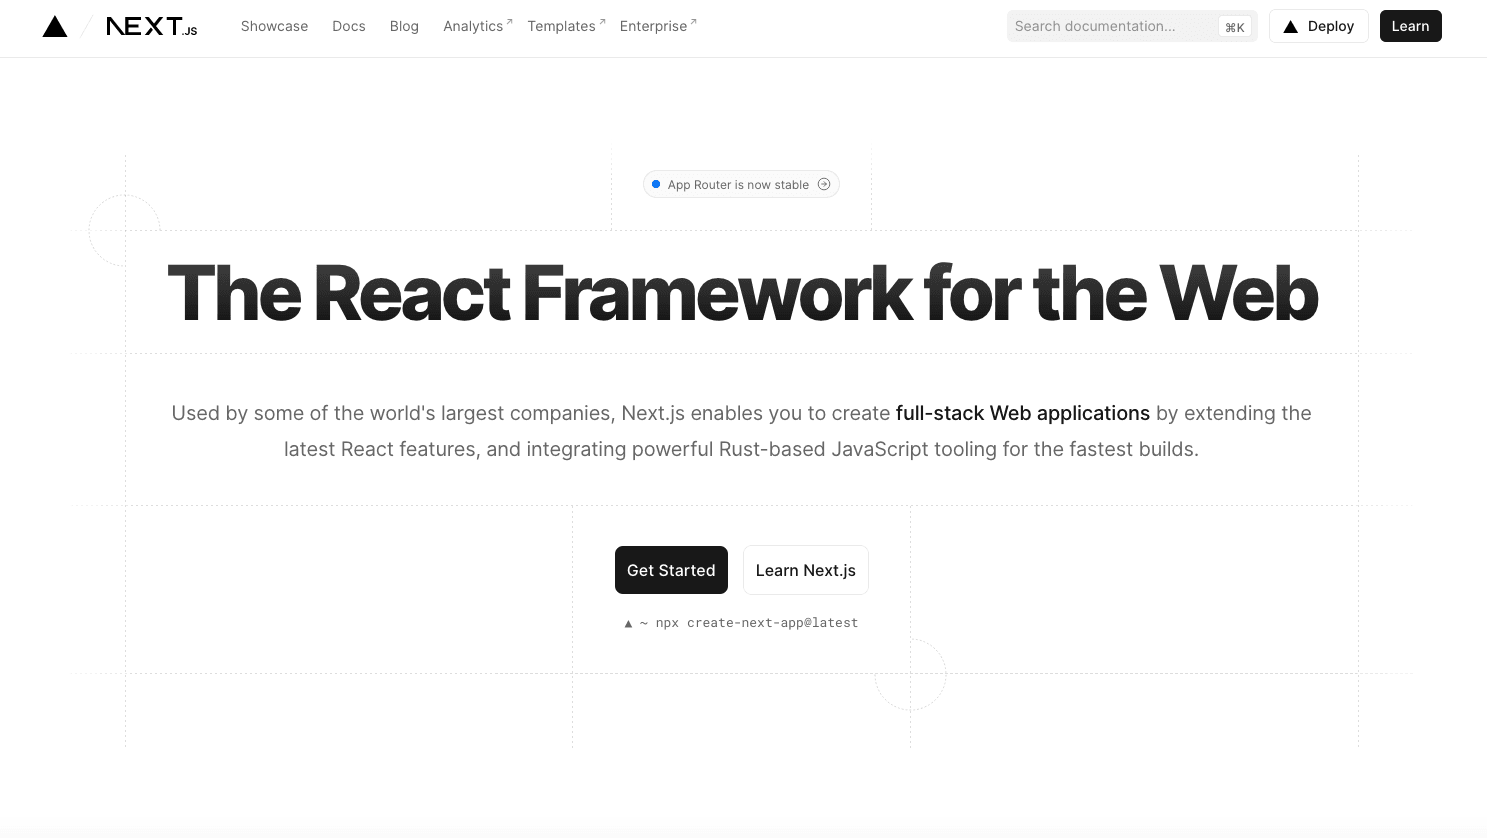 Next_js_by_Vercel_-_The_React_Framework.png